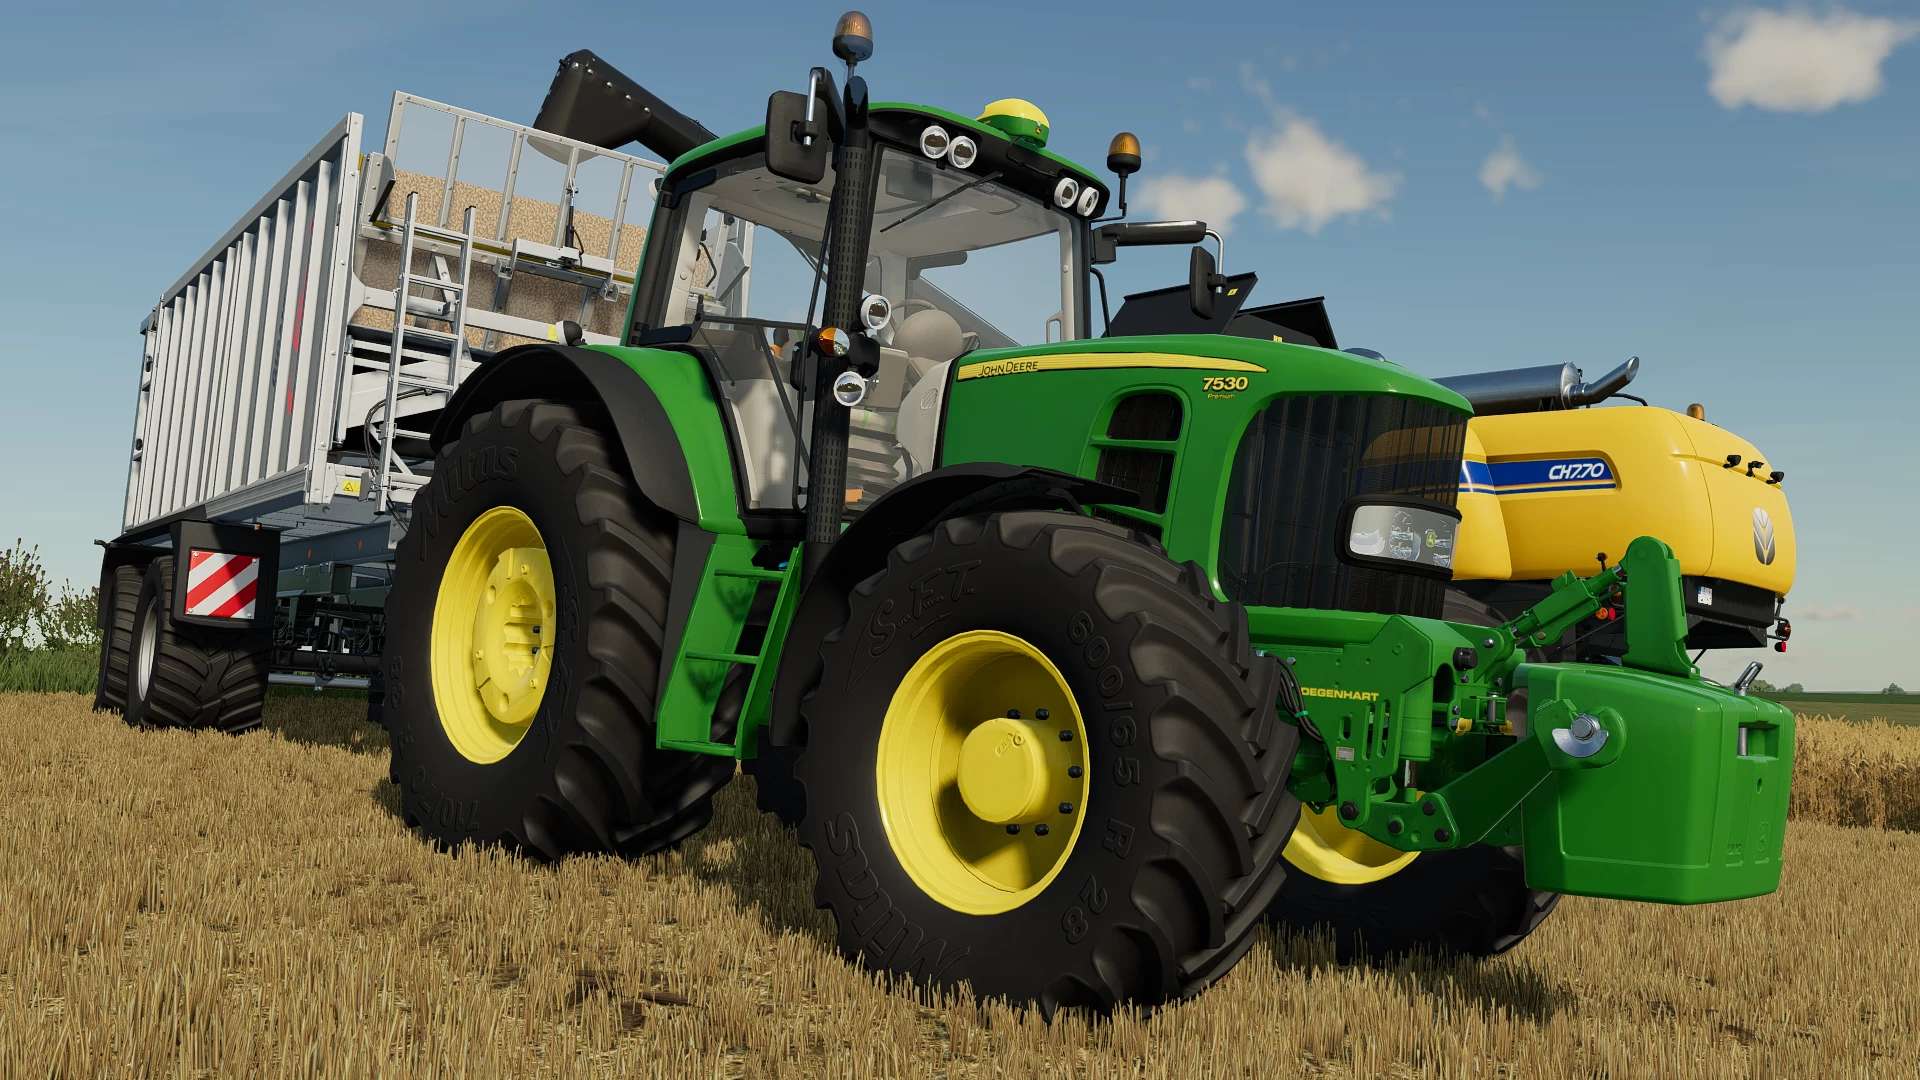 John Deere 7030 Série Premium V1000 Fs22 Mod Farming Simulator 22 Mod 5121